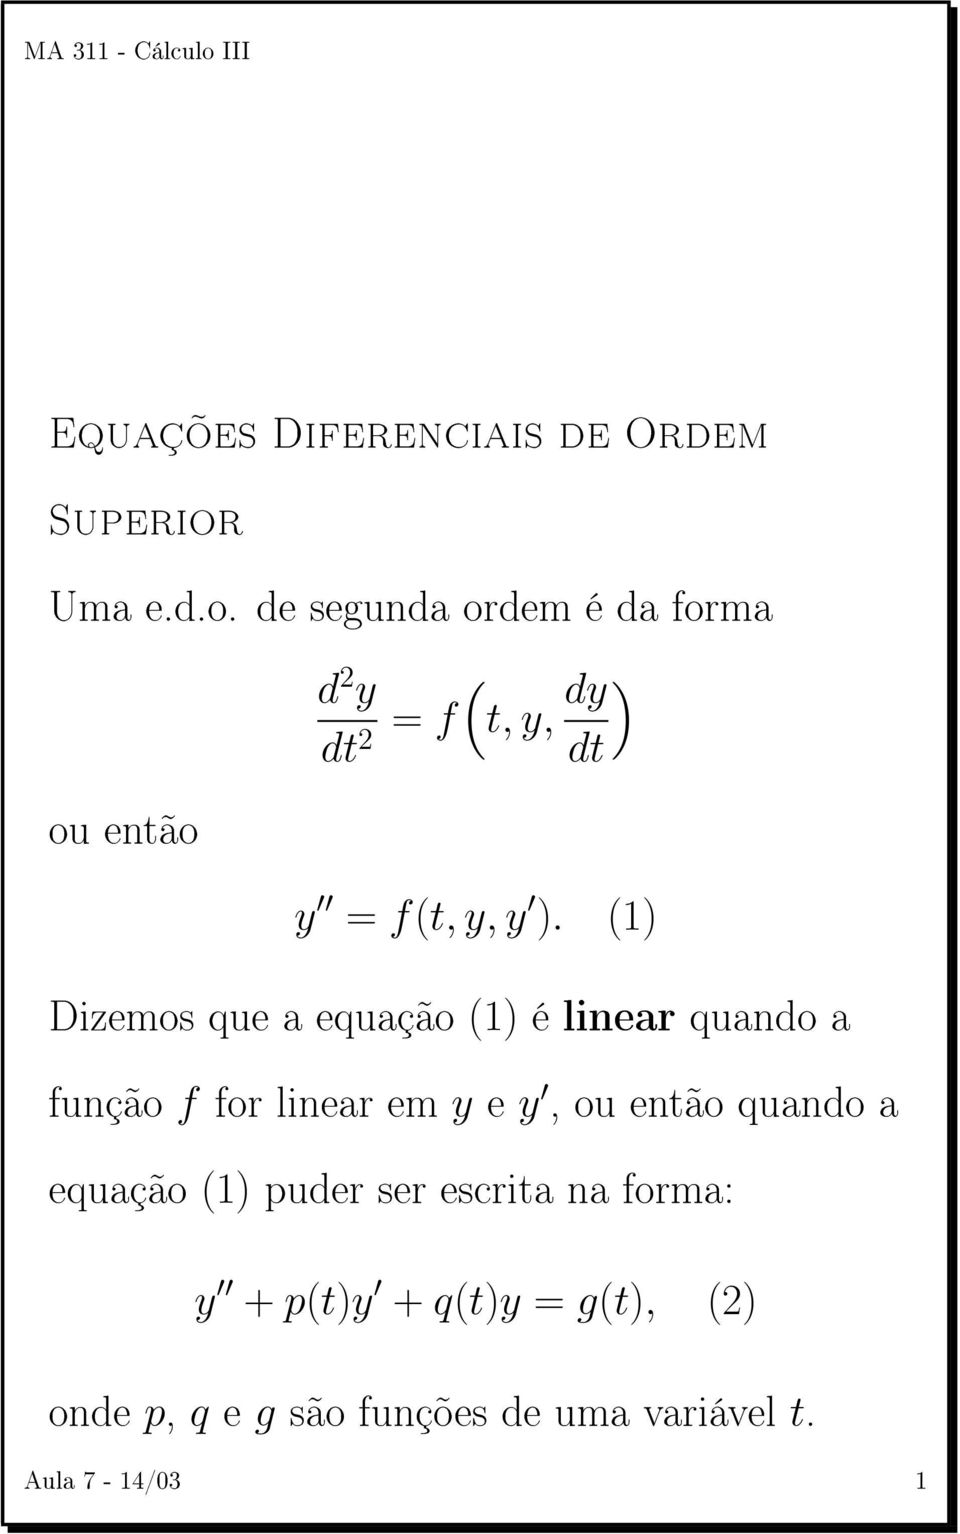 de segunda ordem é da forma ou então d 2 y ( dt = f t, y, dy ) 2 dt y = f(t, y, y ).